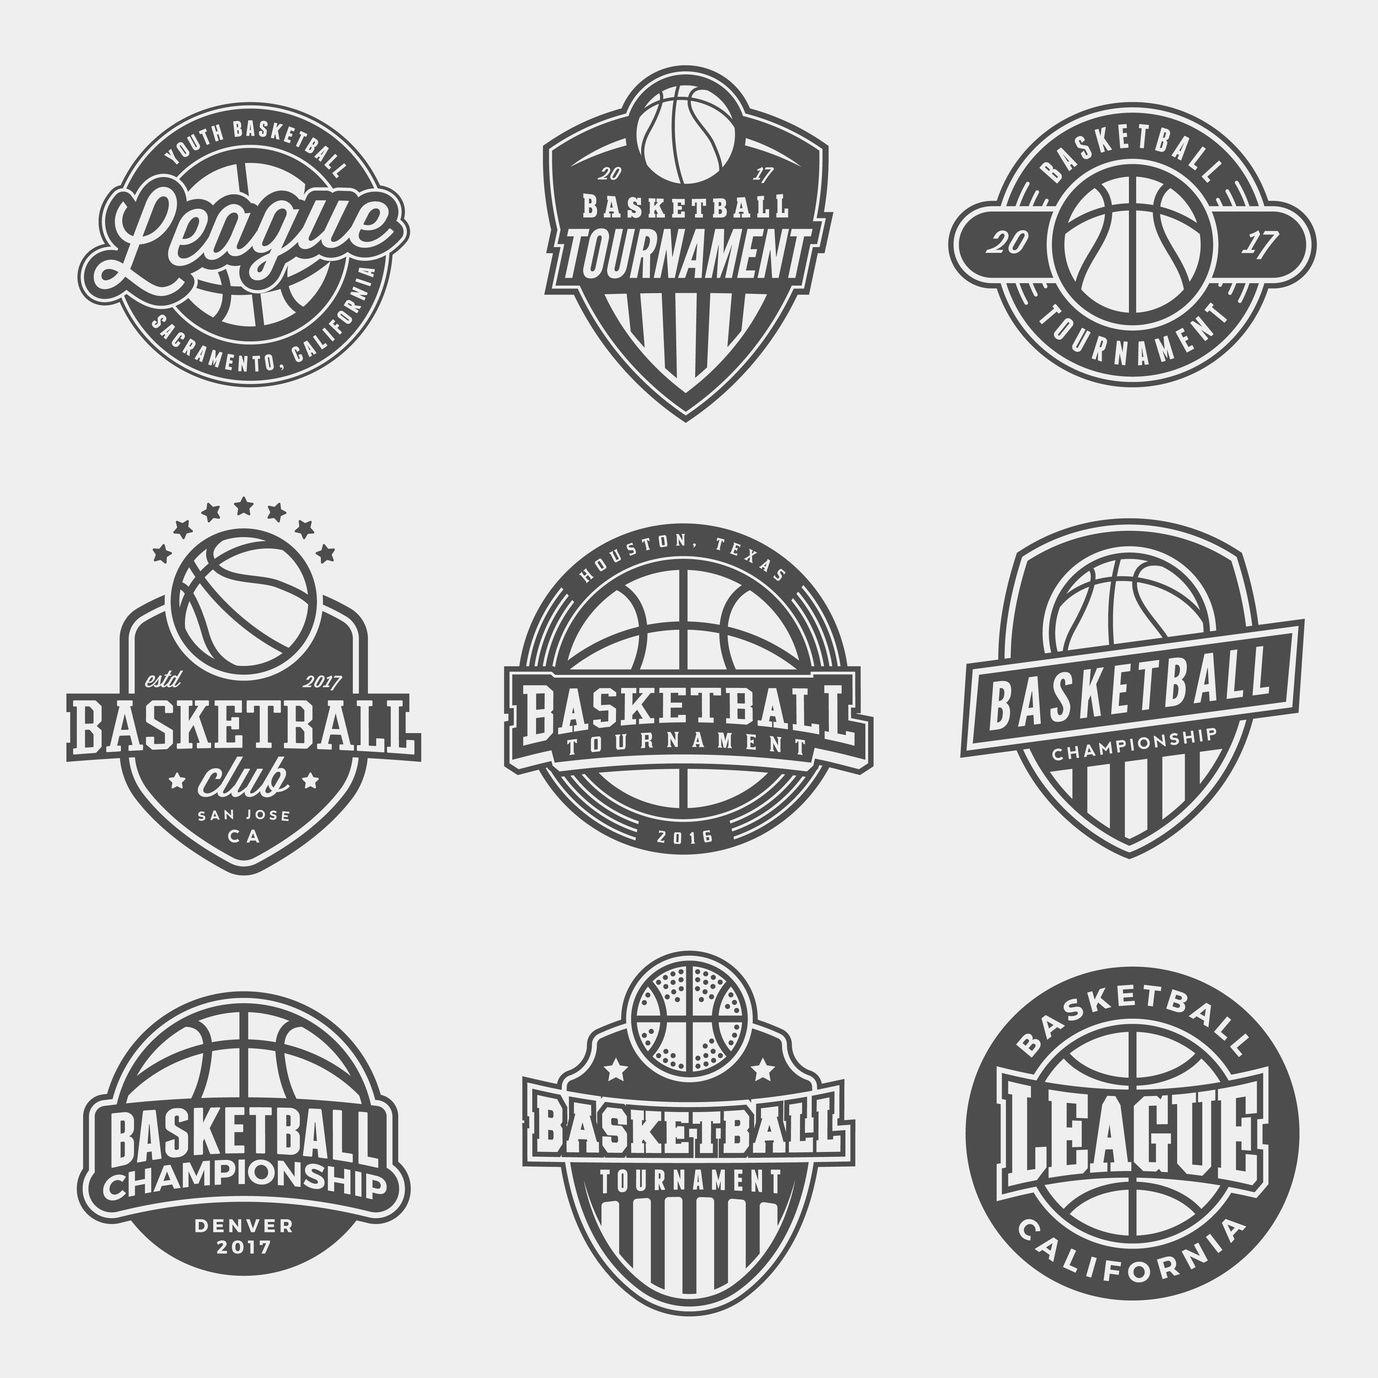 Basetball Logo - How to Create a Fun Basketball Logo • Online Logo Maker's Blog